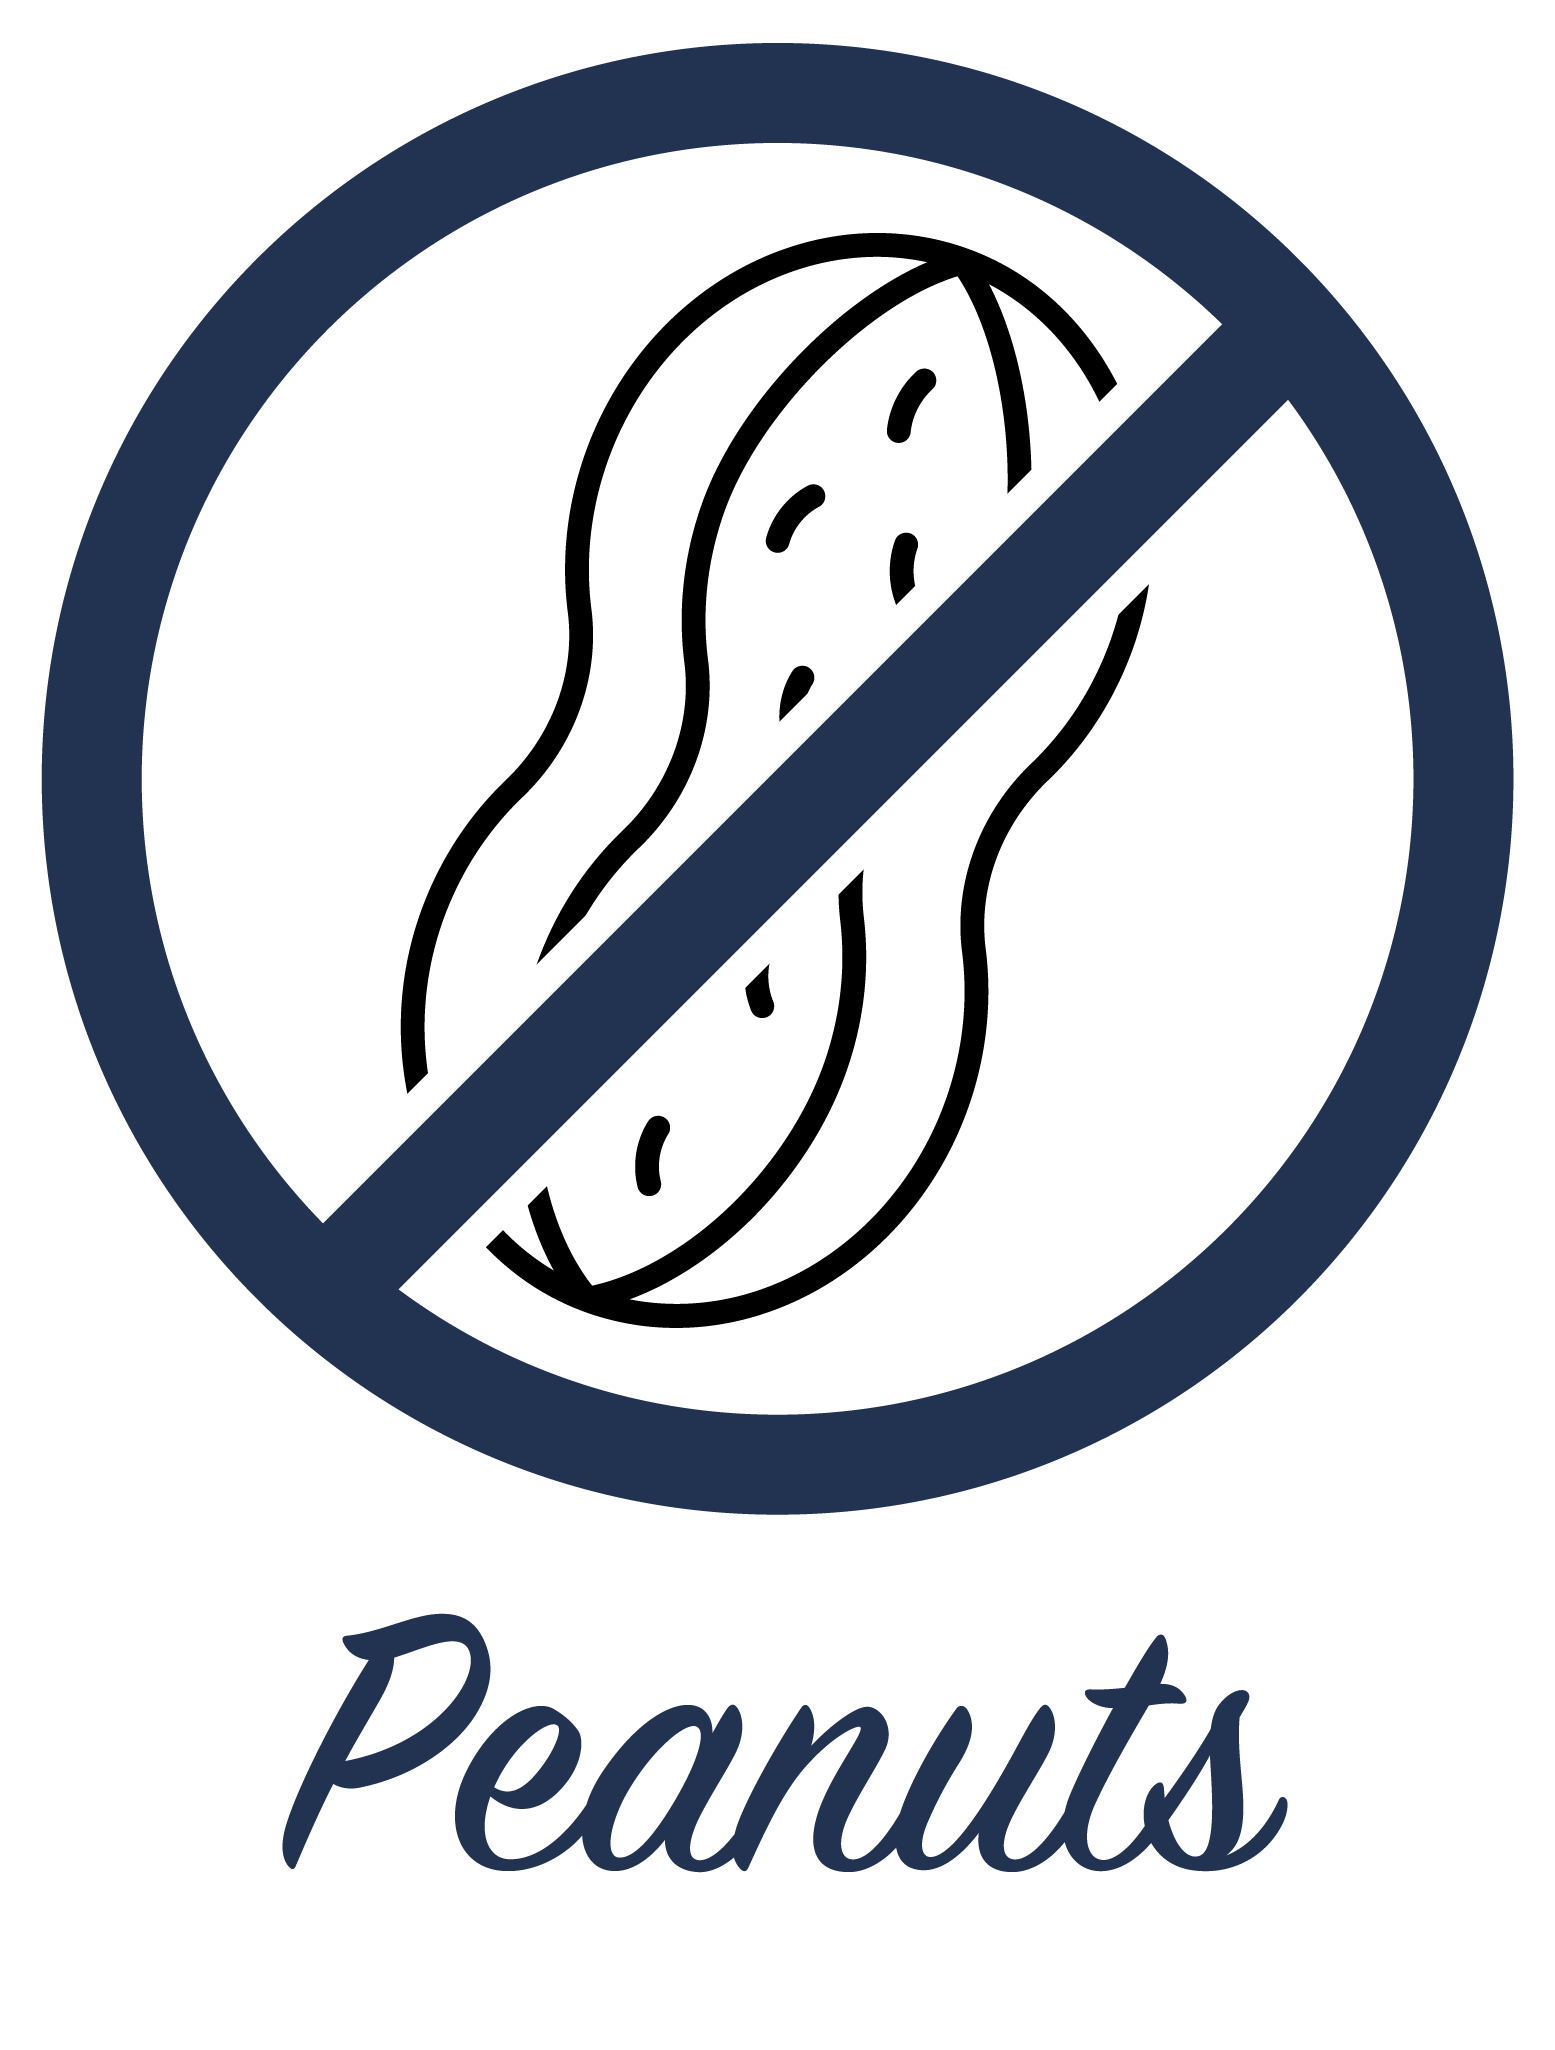 No Peanuts